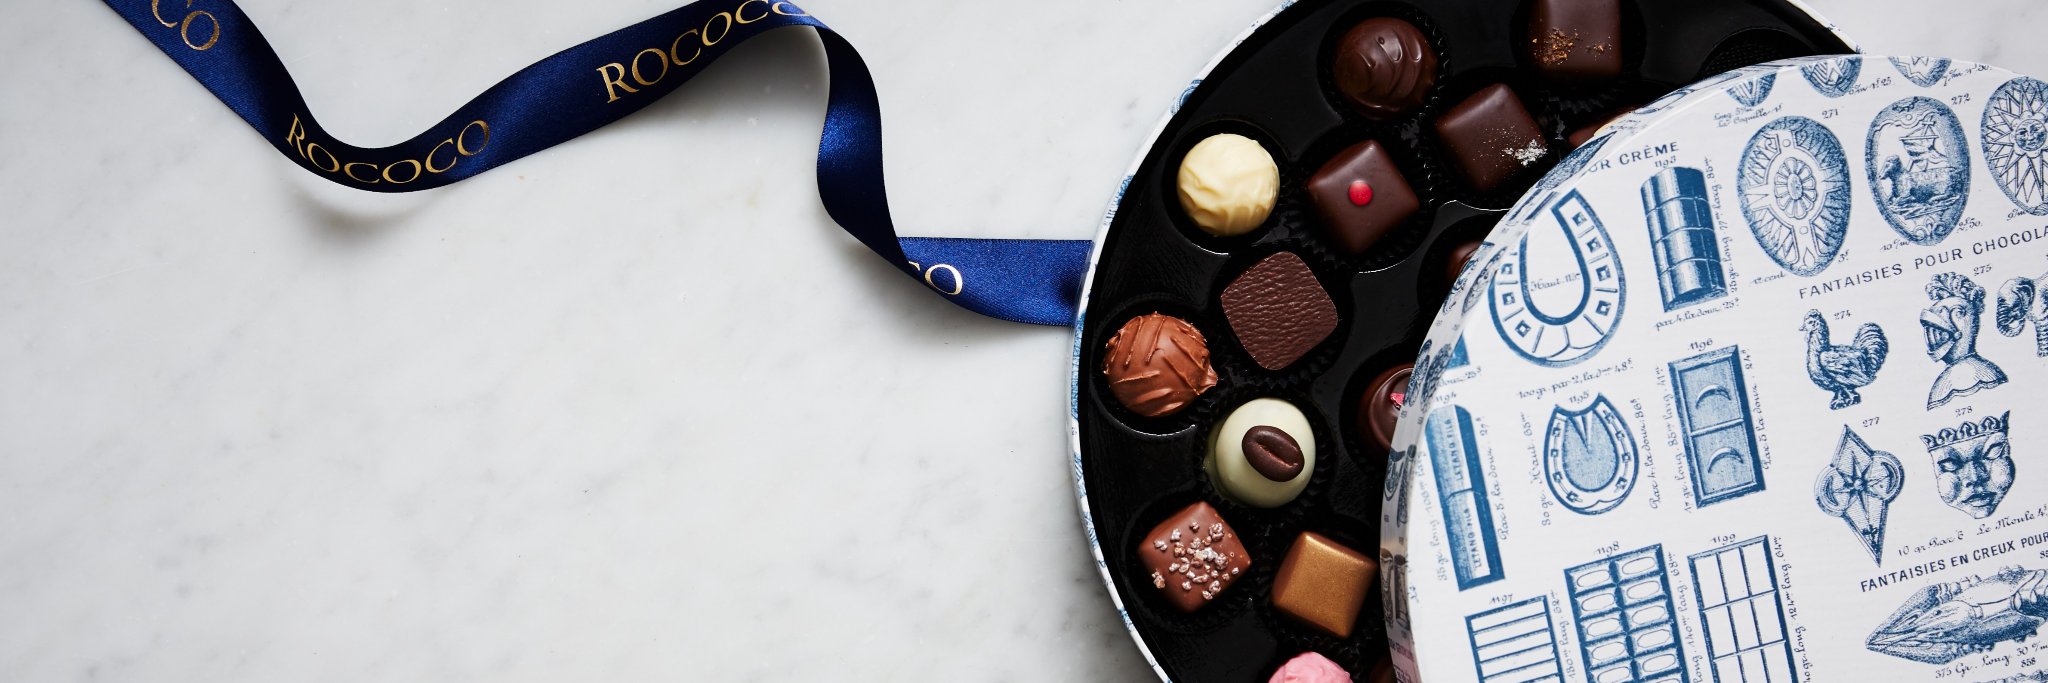 Rococo Chocolates Ltd